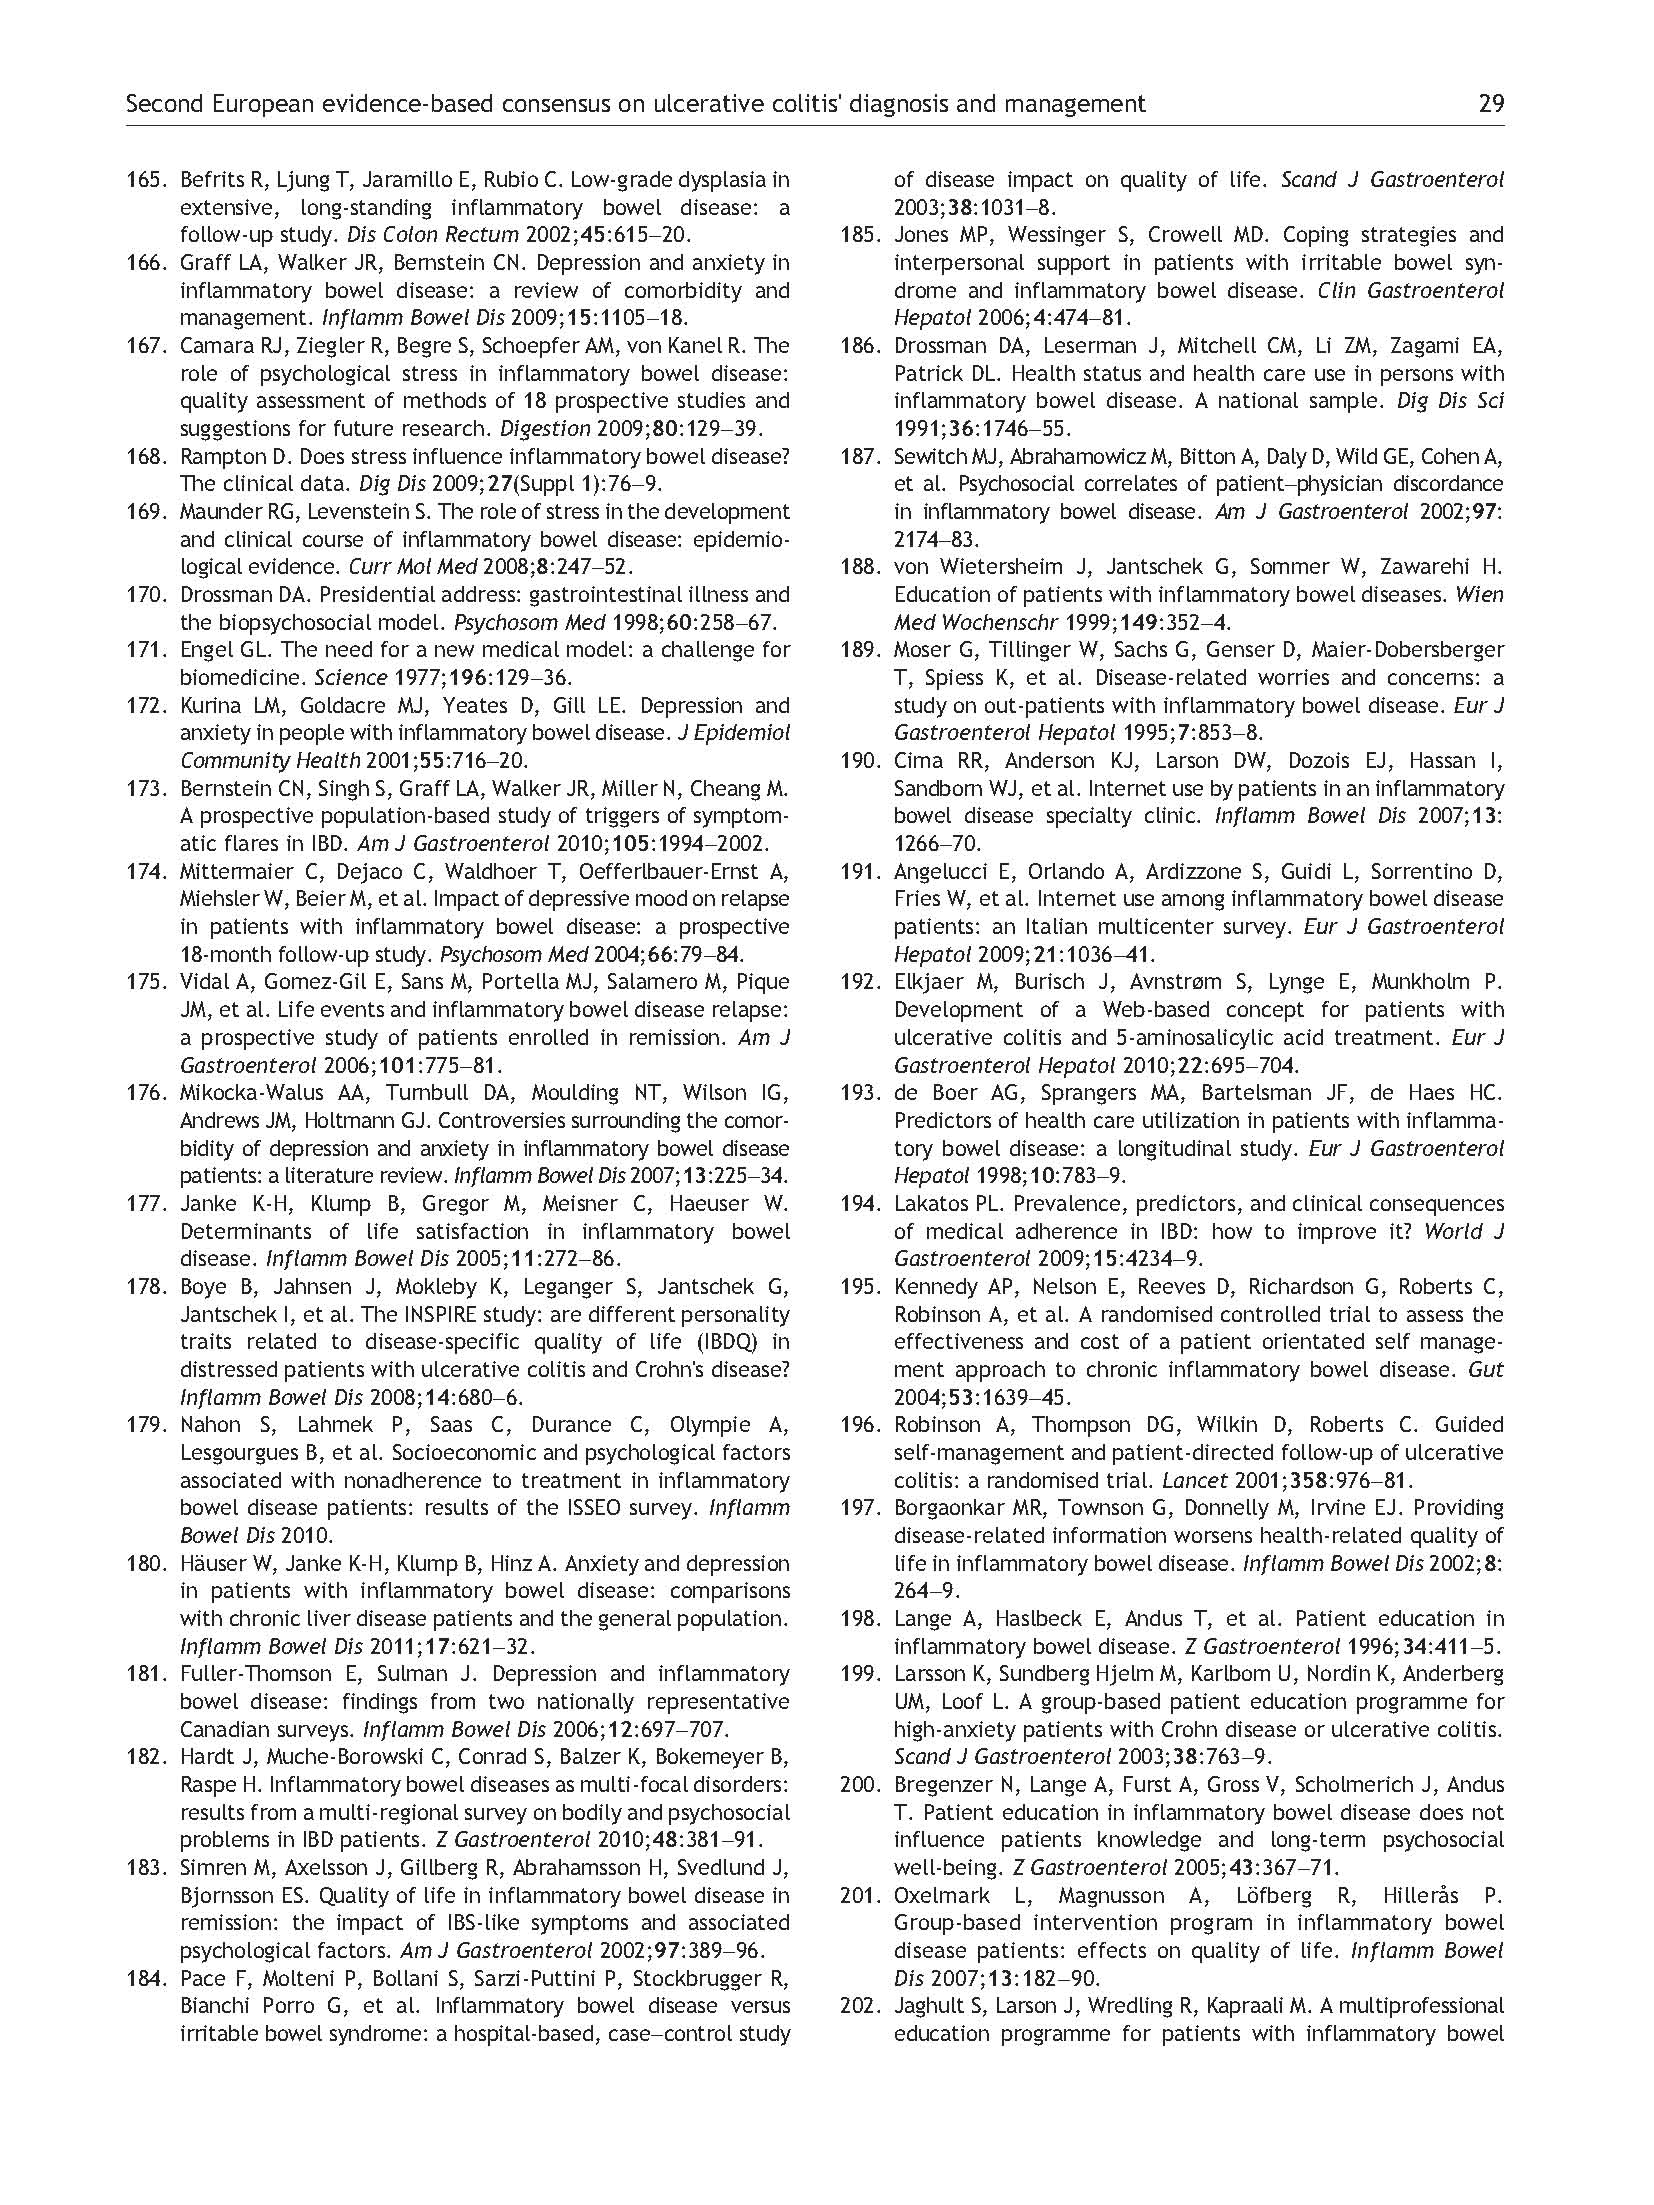 2012-ECCO第二版-欧洲询证共识：溃疡性结肠炎的诊断和处理—特殊情况_页面_29.jpg